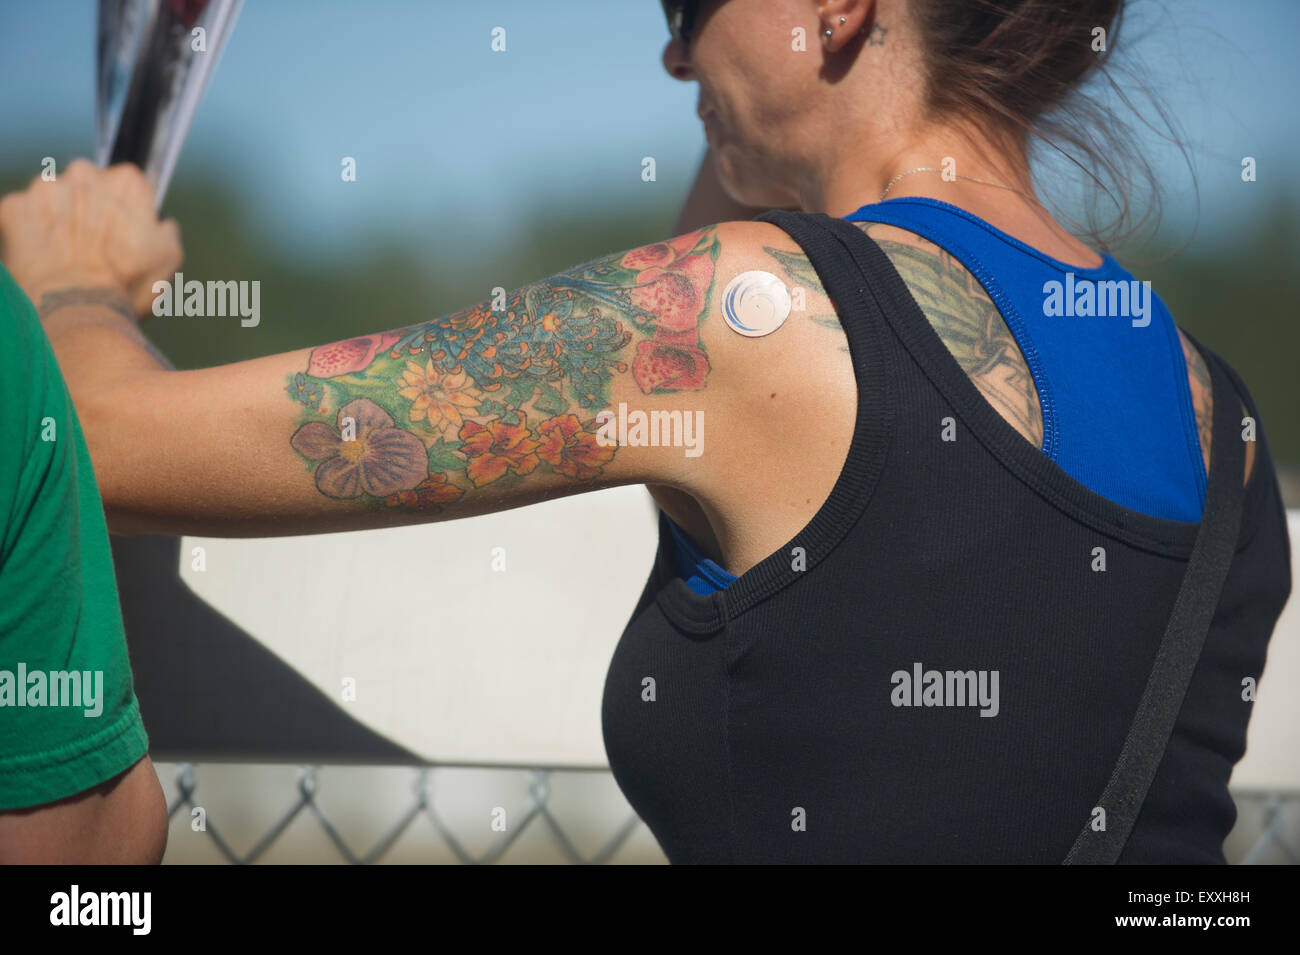 Frau mit Tattoos auf dem Arm. Stockfoto